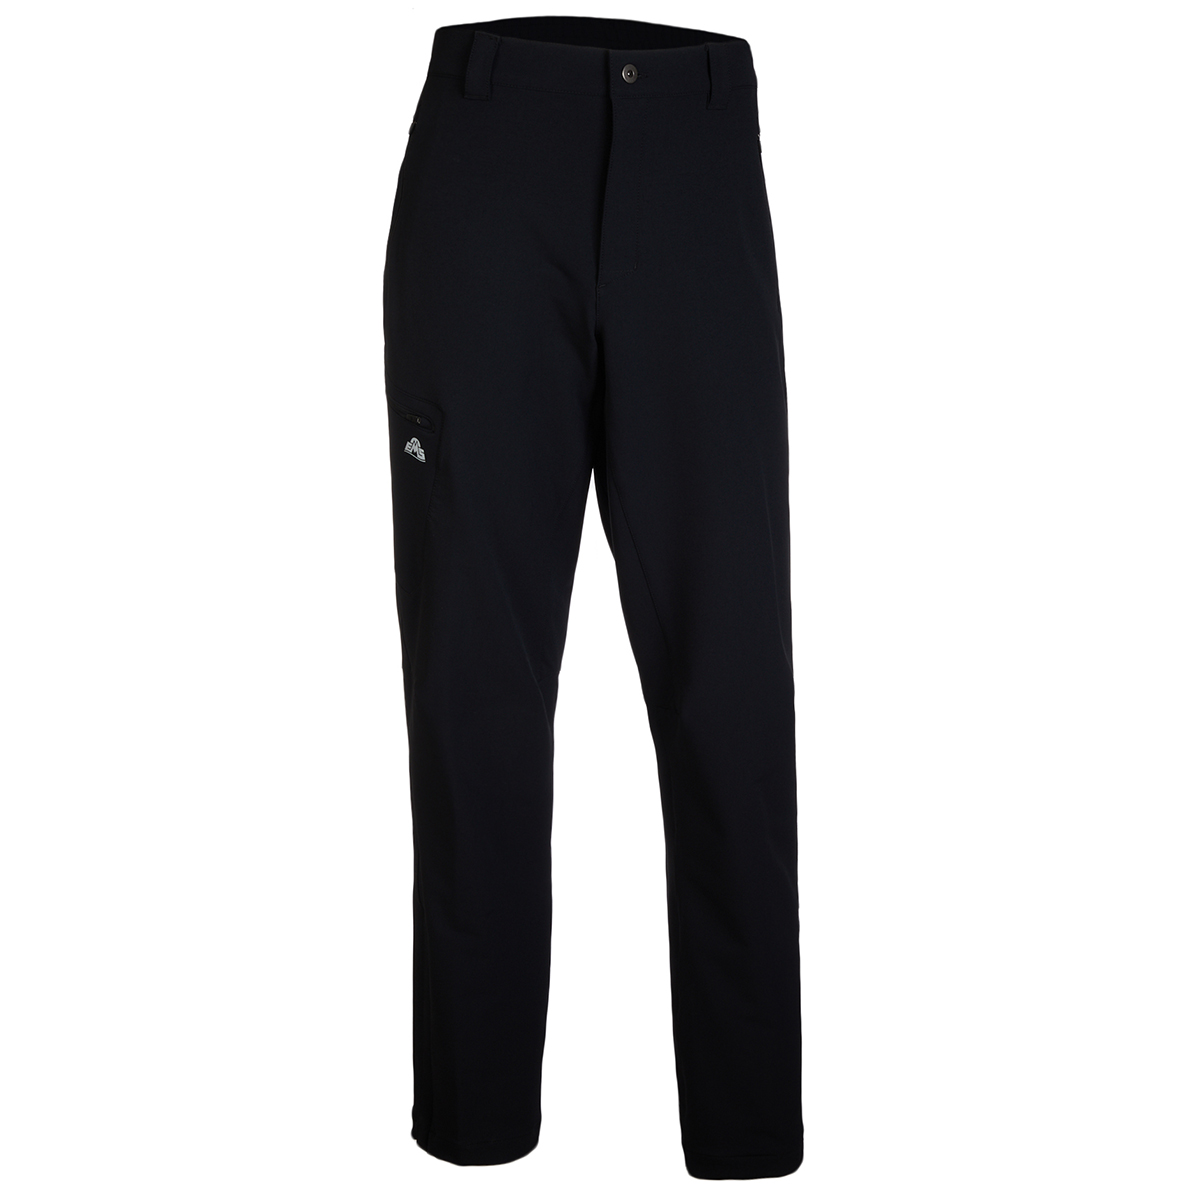 Ems Men's Pinnacle Soft Shell Pants - Black, 36/30